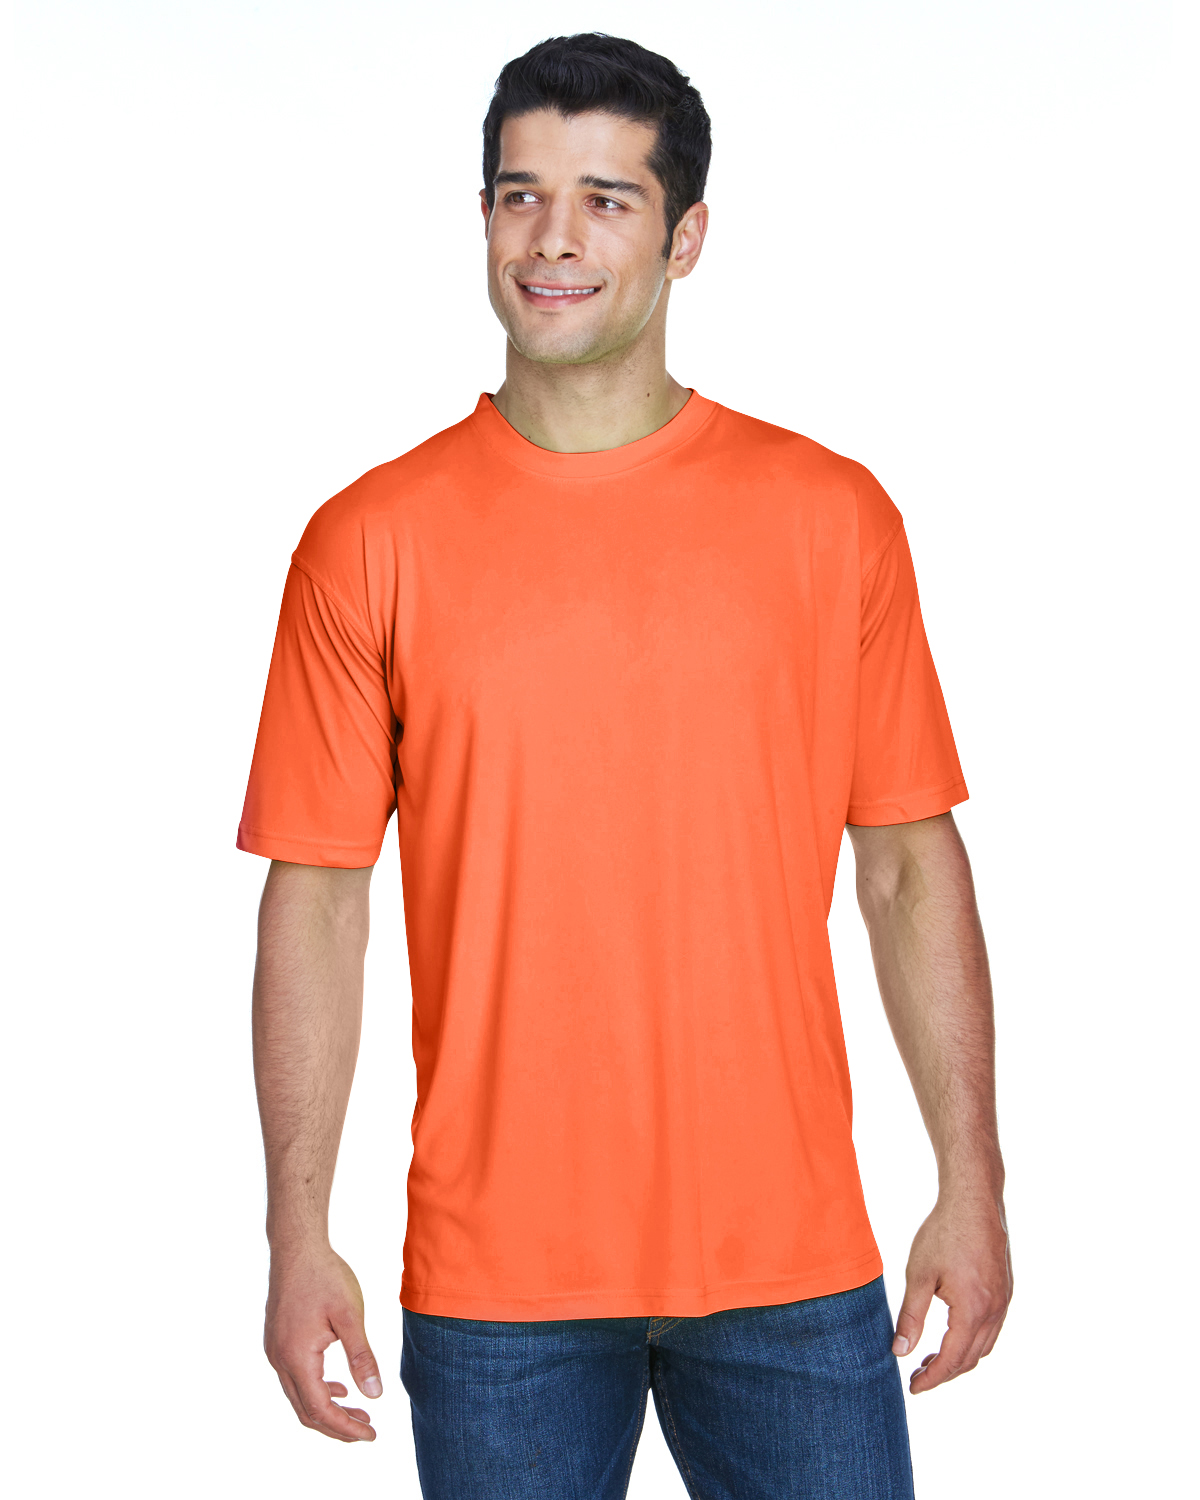 https://images.shirtspace.com/fullsize/h2PVvbwFKshdsFFyyHNRHg%3D%3D/124430/5573-ultraclub-8420-men-s-cool-dry-sport-performance-interlock-t-shirt-front-bright-orange.jpg